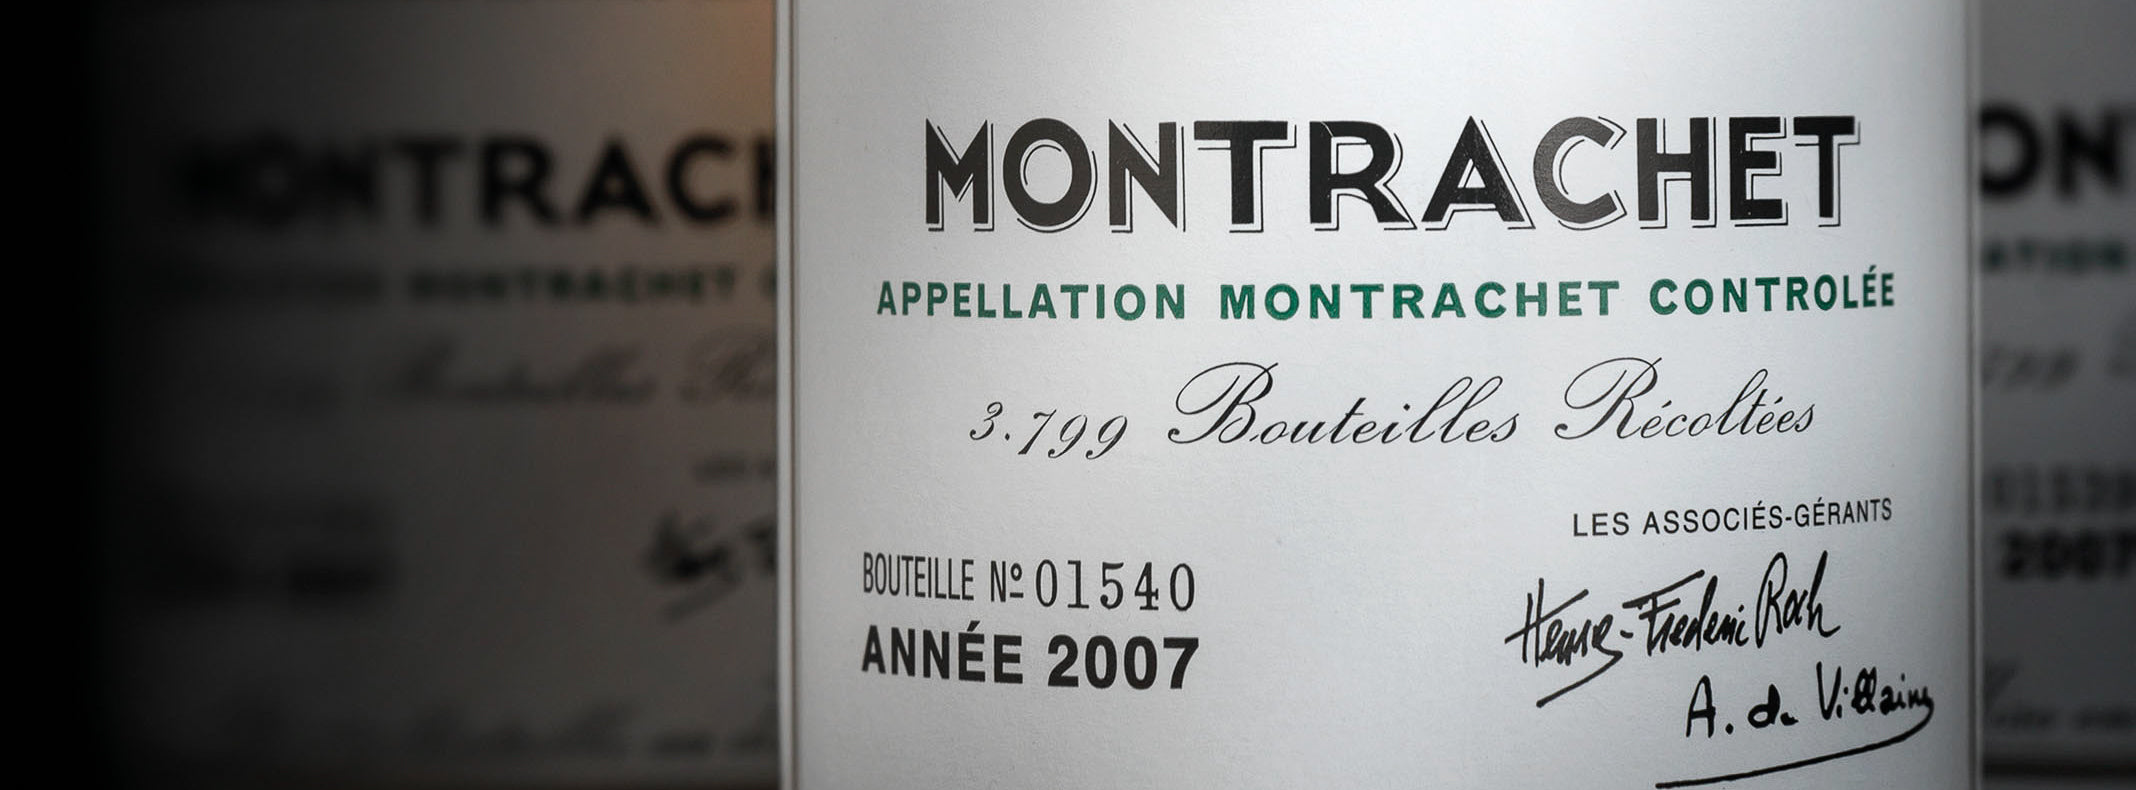 Le Montrachet Grand Cru